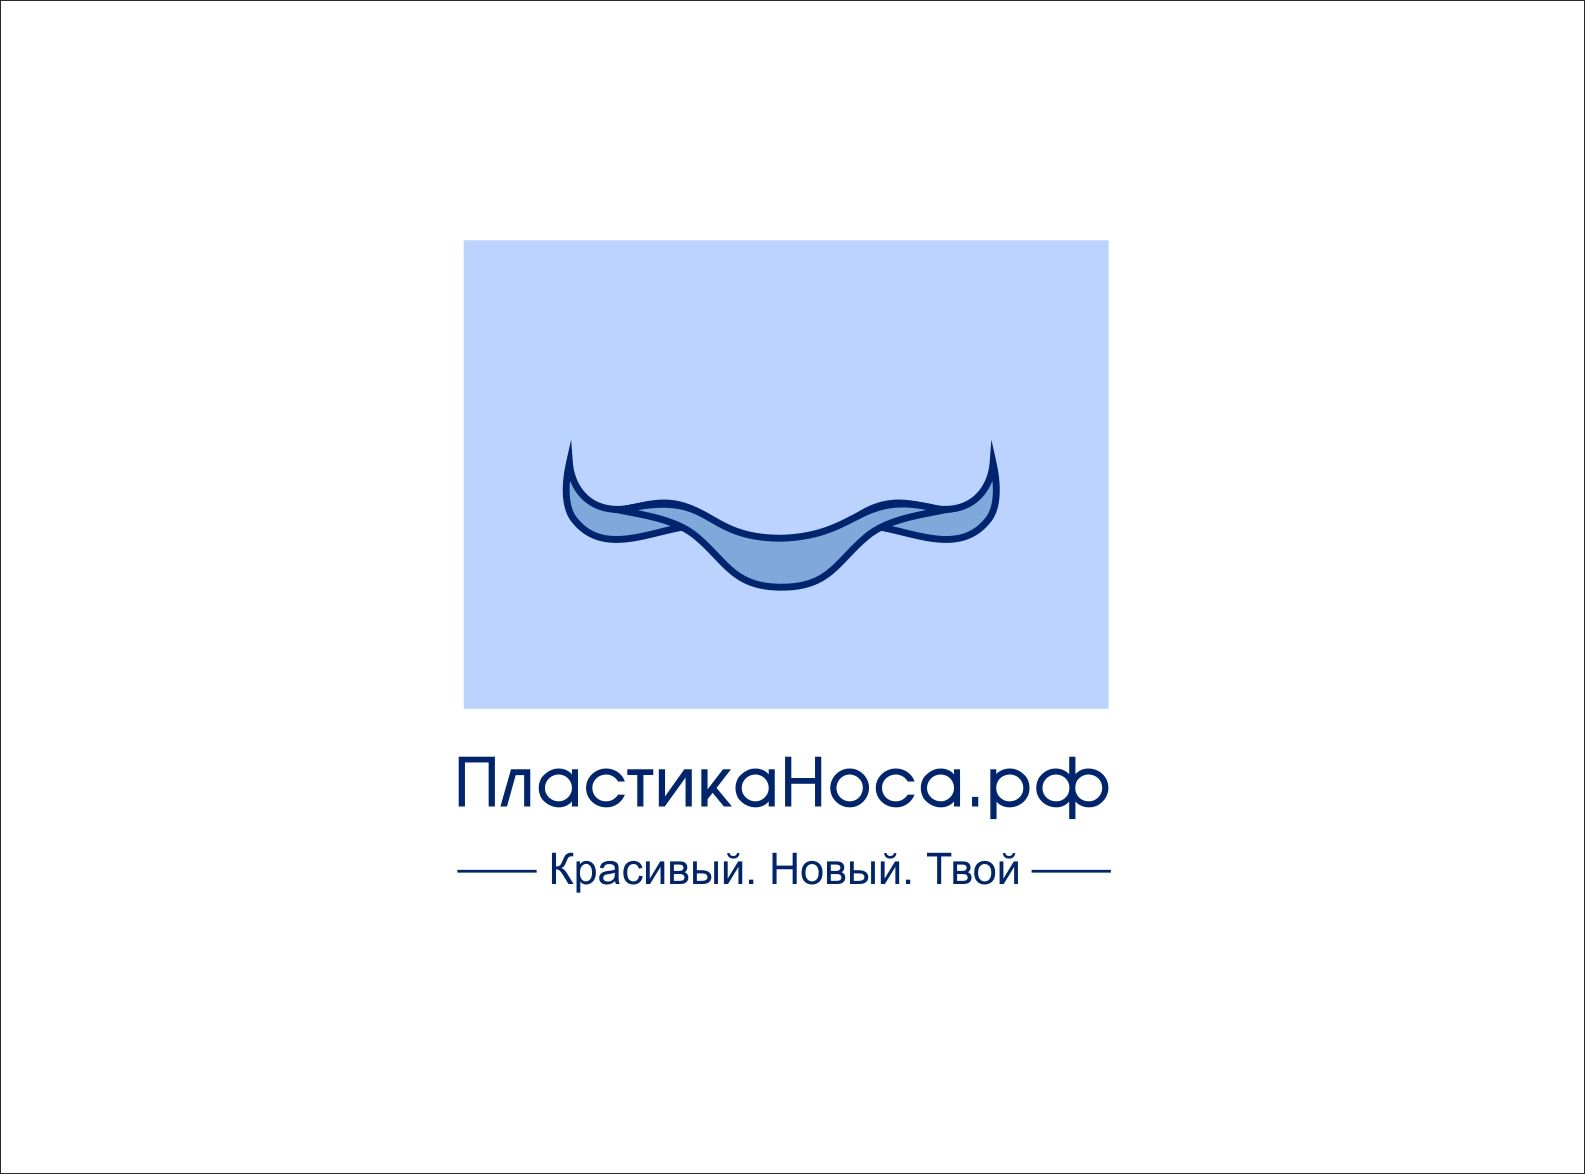 Логотип ПластикаНоса.рф - дизайнер art-valeri